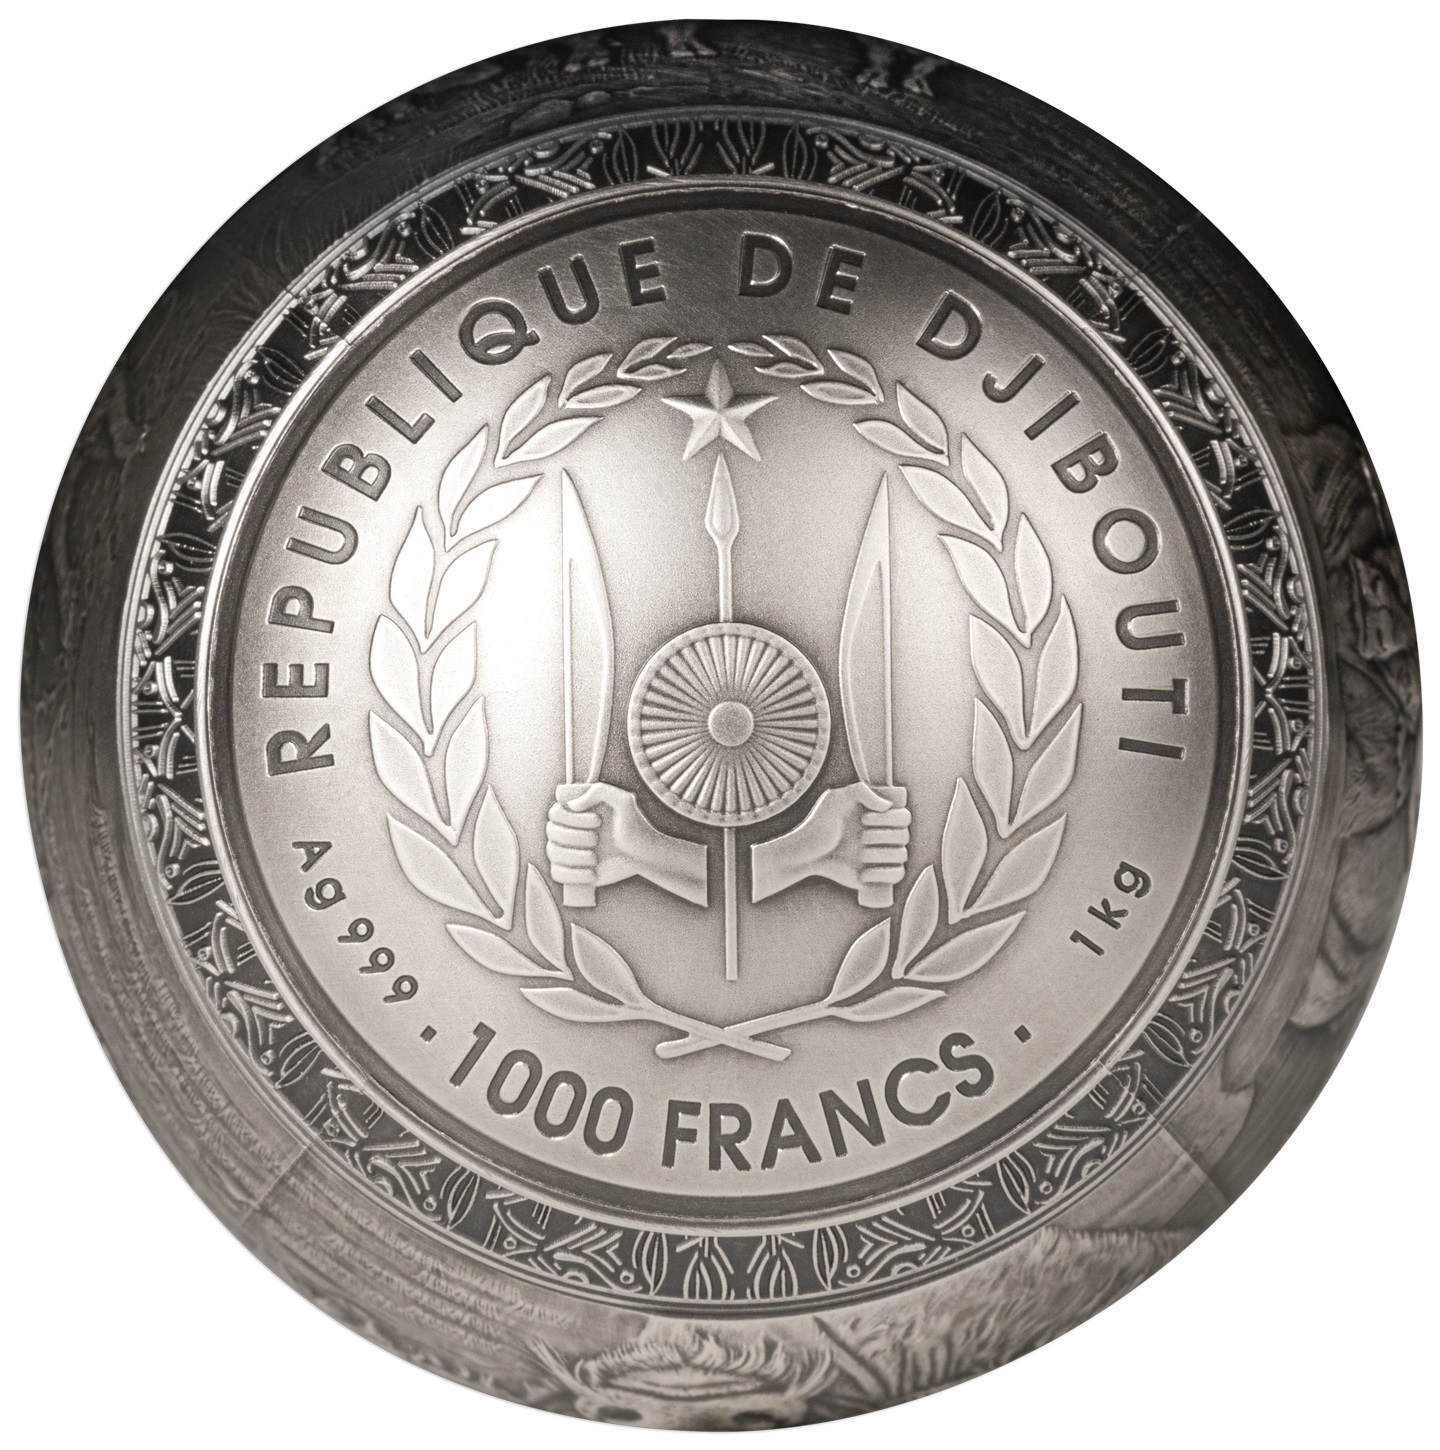 (W057.1000.F.2024.1.kg.Ag.1565460102) 1000 Francs Djibouti 2024 1 kilogram Antique silver - Buffalo (view on face value) (zoom)